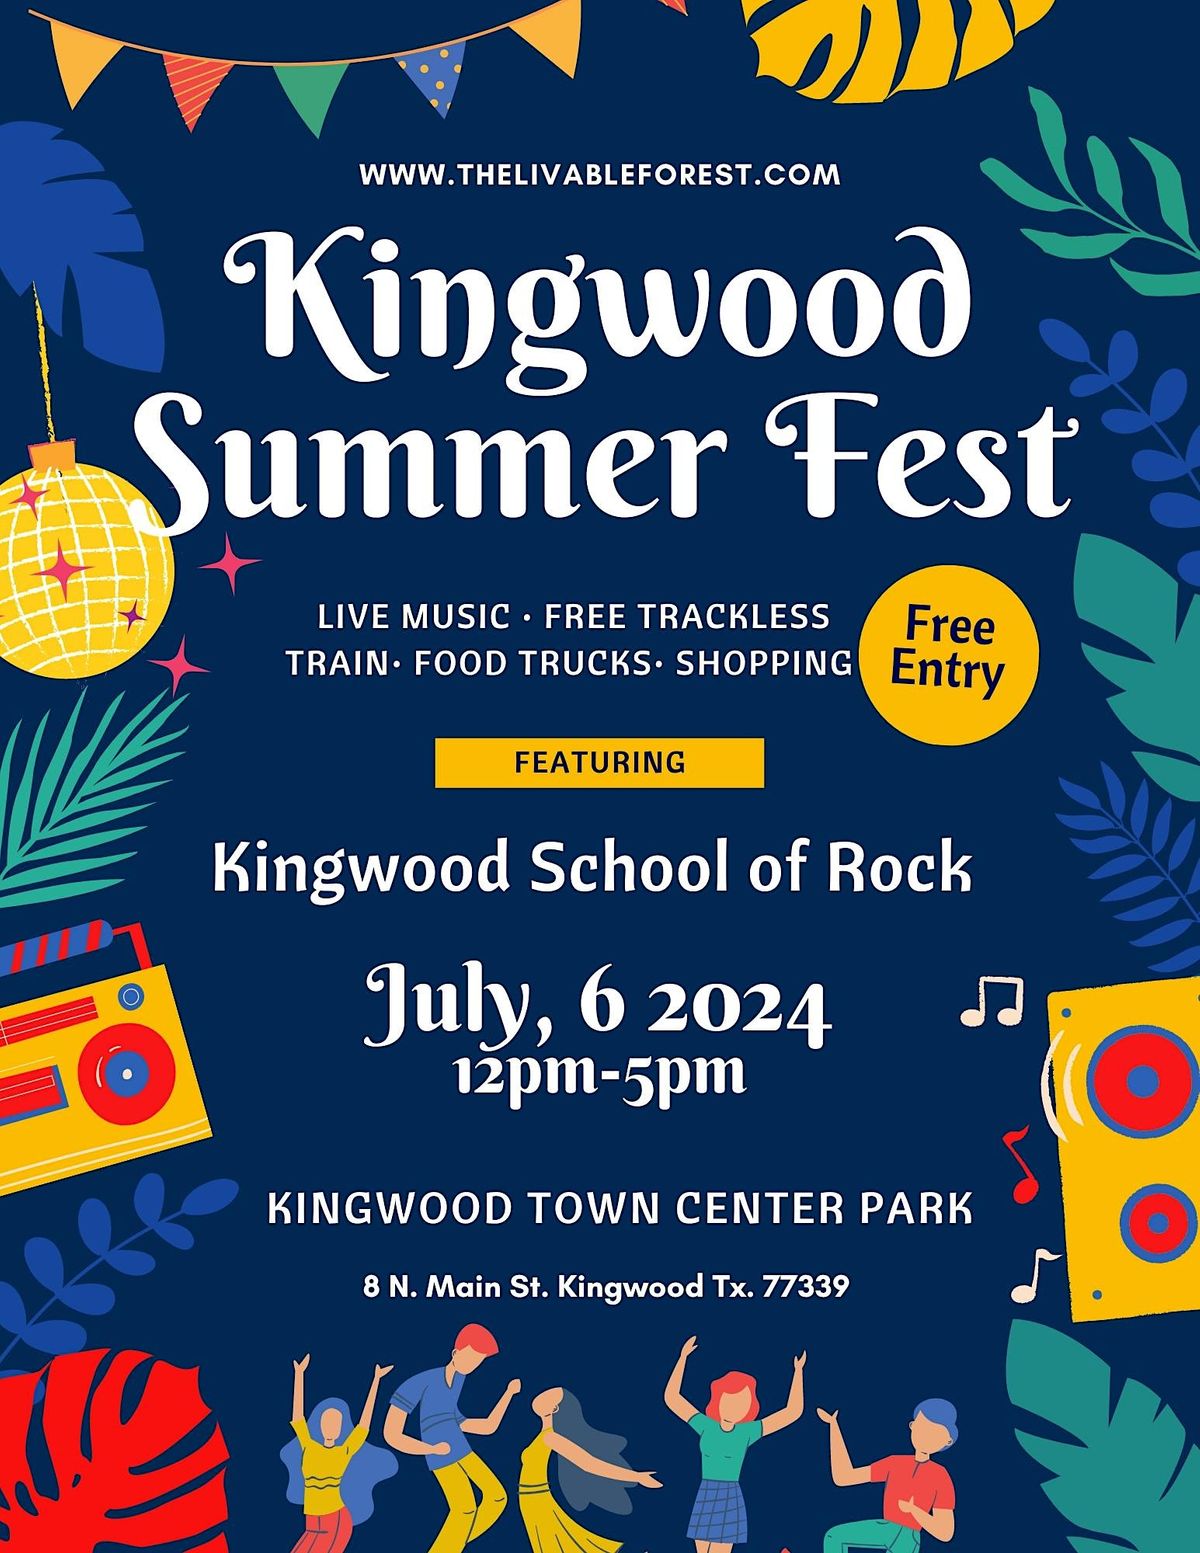 Kingwood Summer Fest